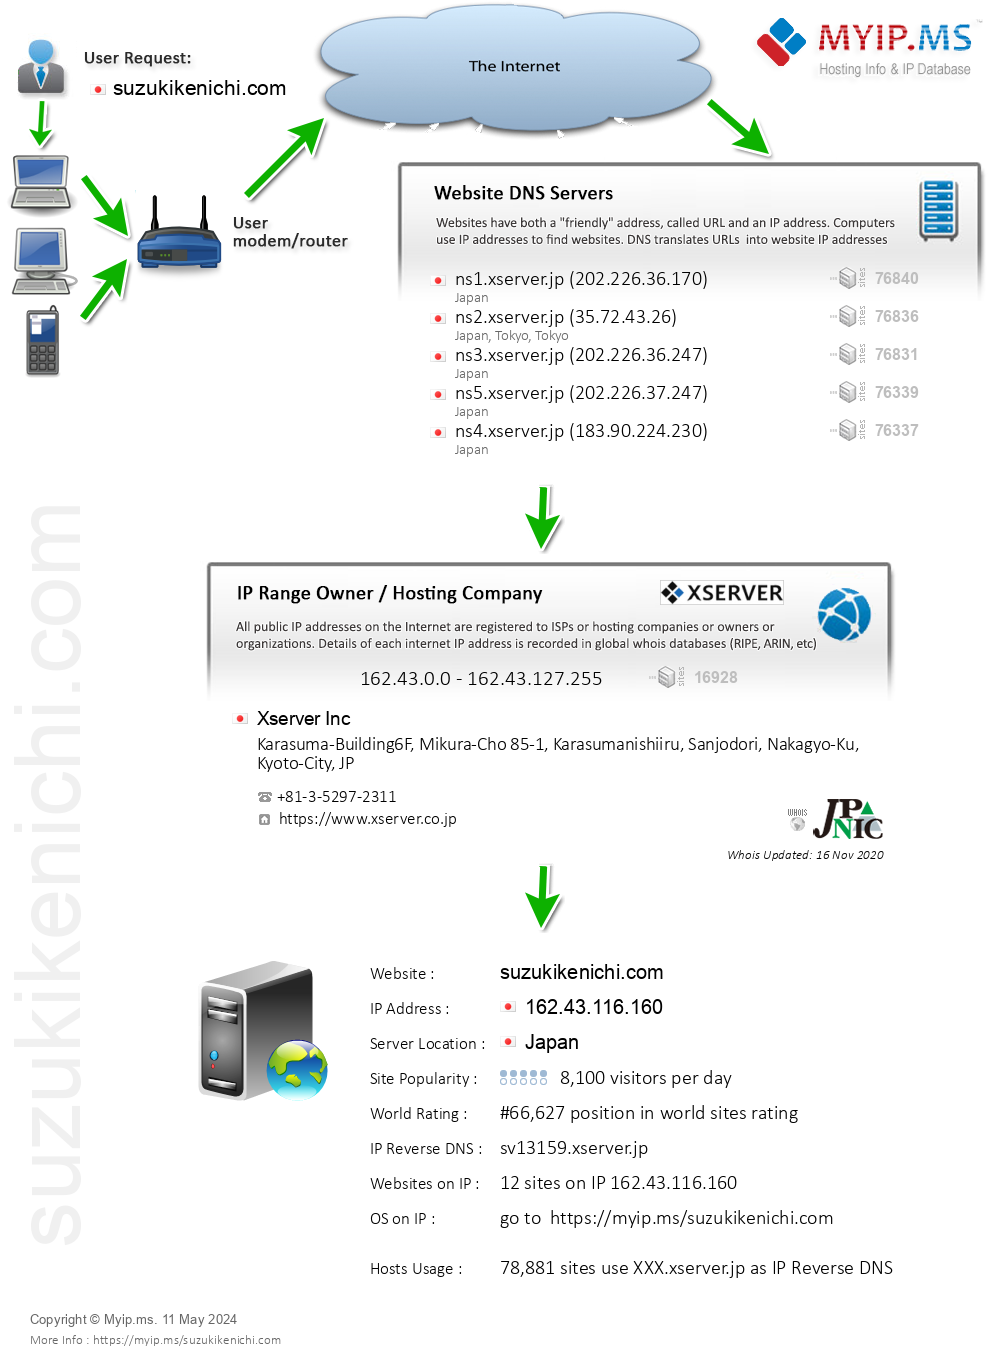 Suzukikenichi.com - Website Hosting Visual IP Diagram